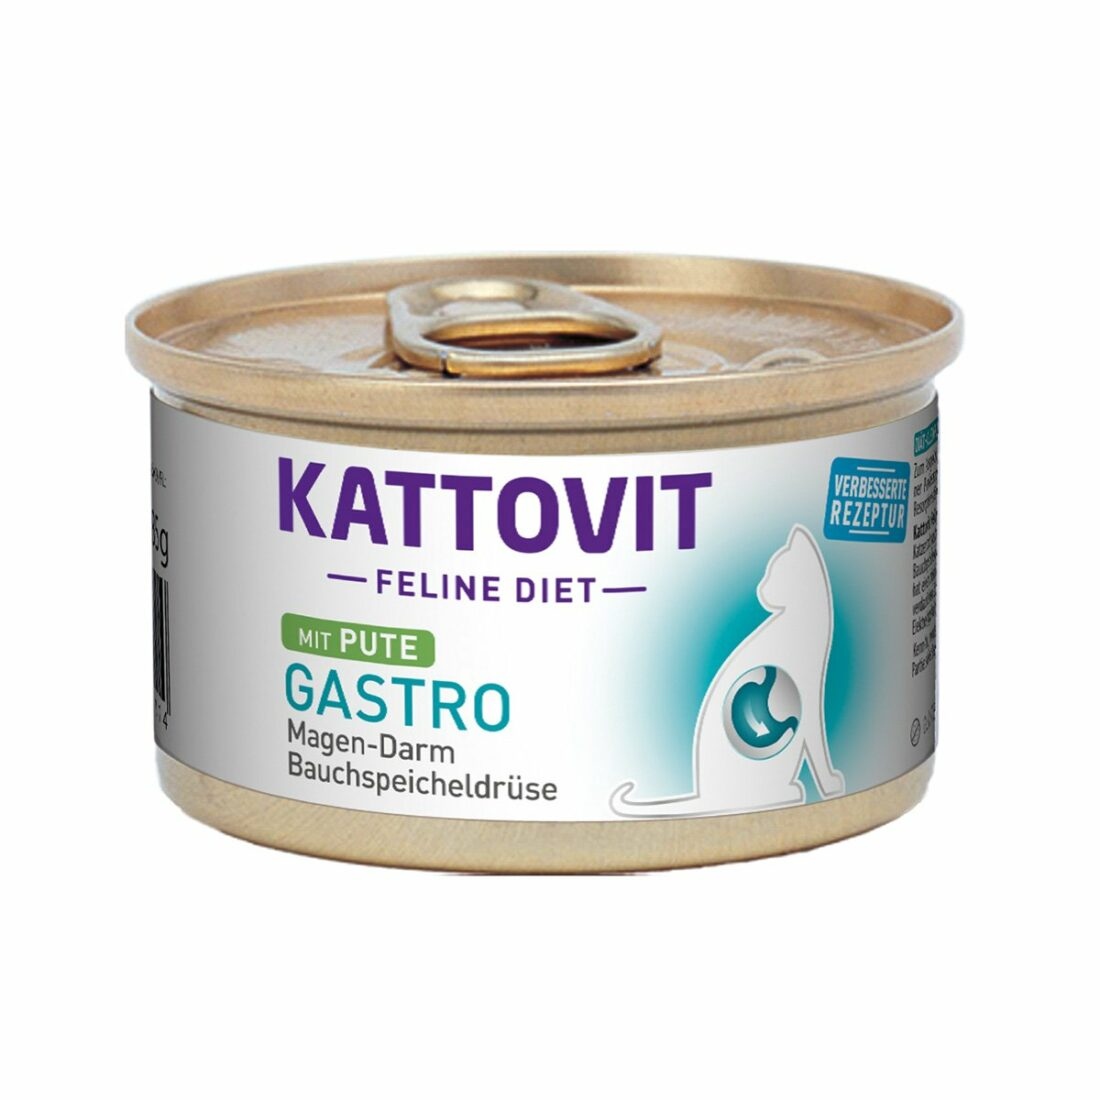 KATTOVIT Feline Diet Gastro